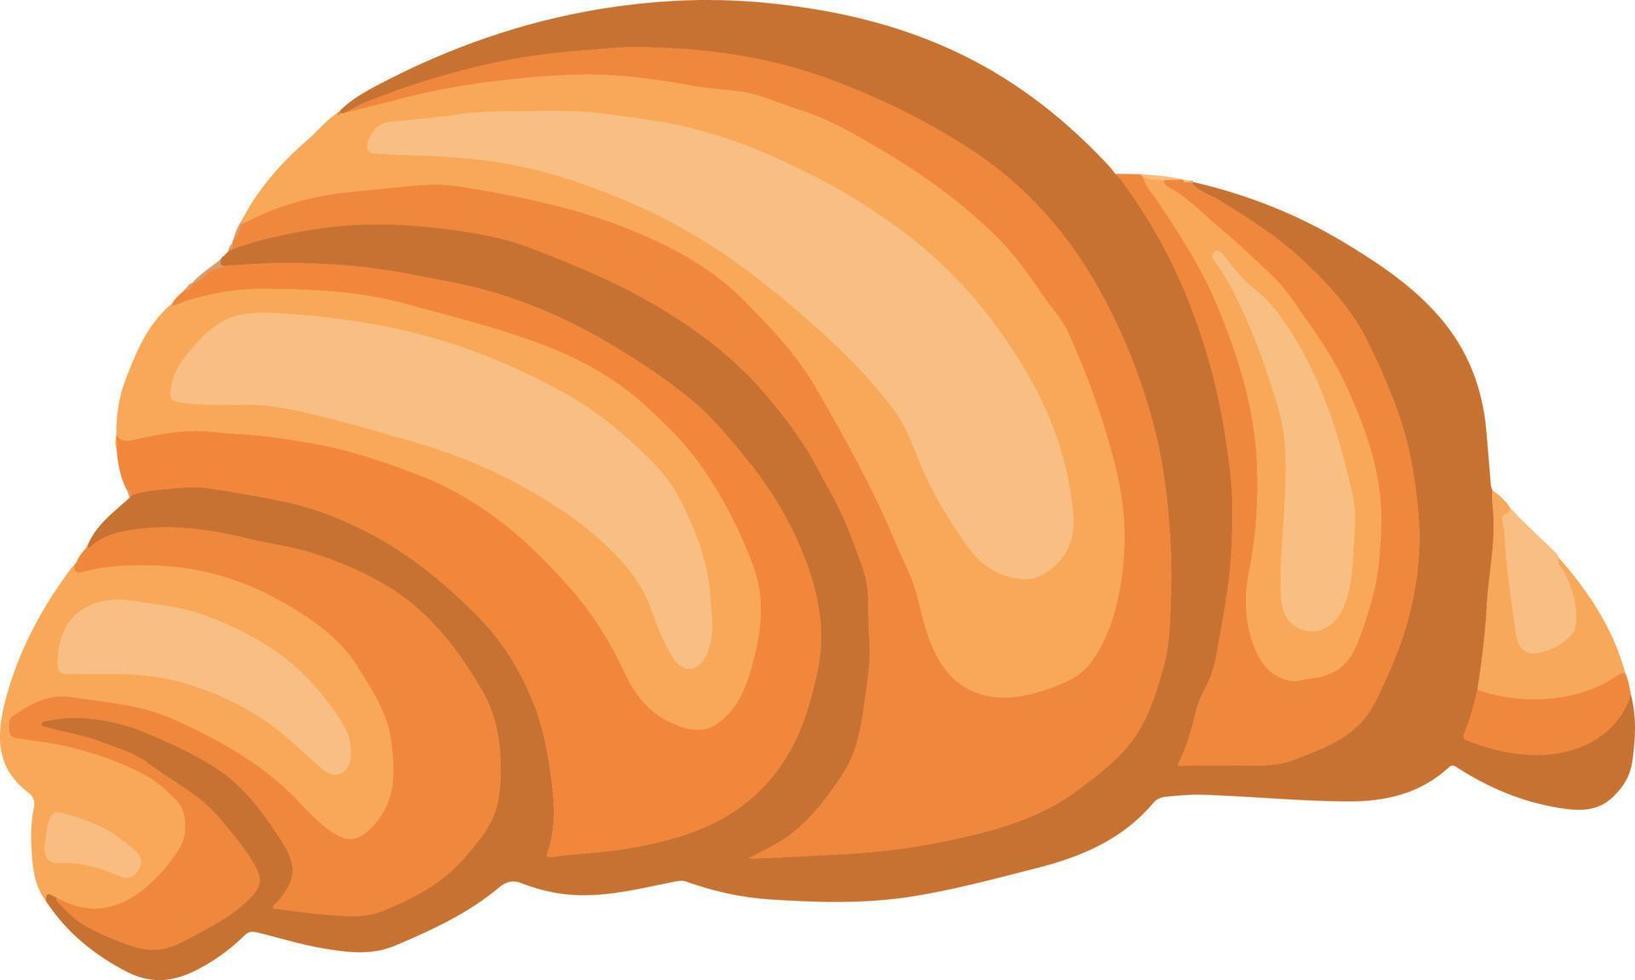 croissant, gebakdessert, handgetekende illustratie vector